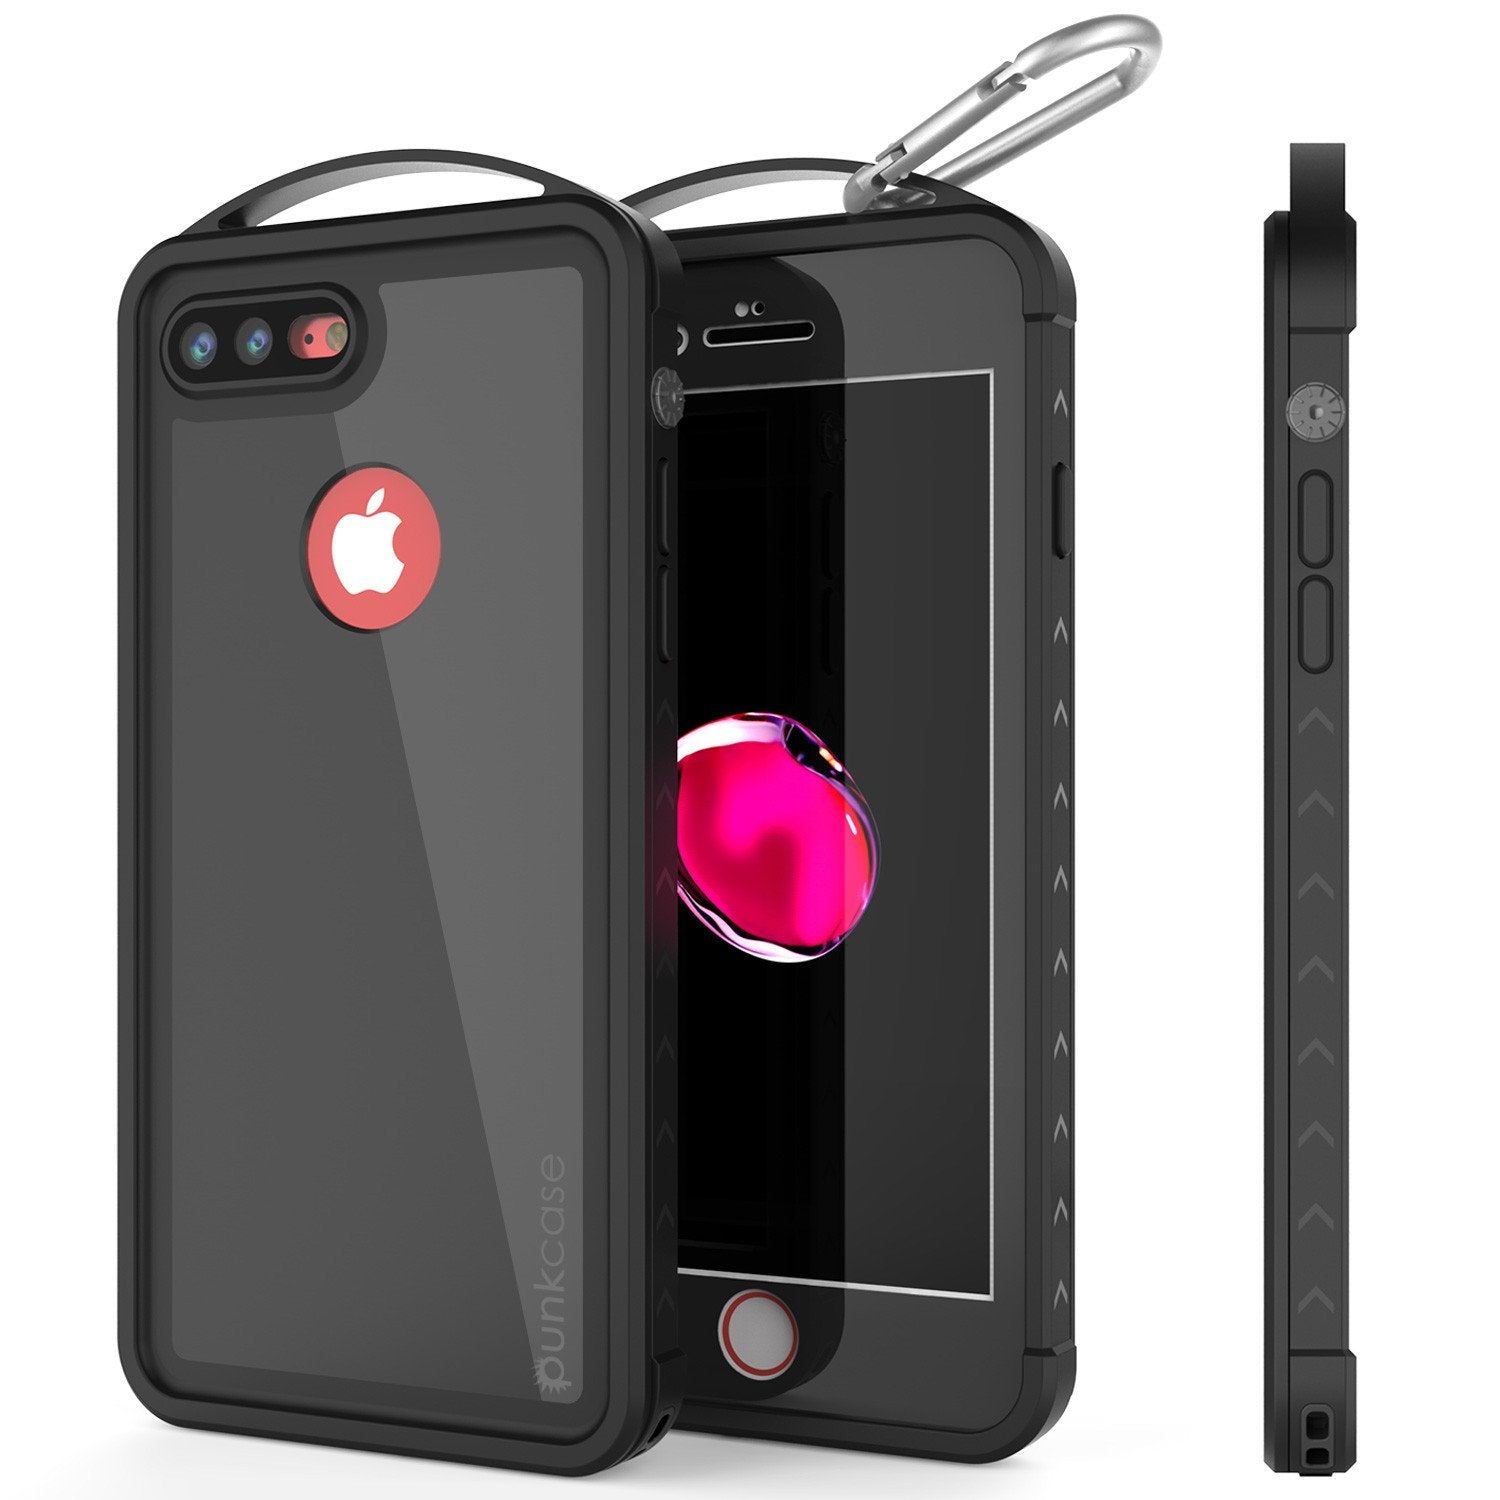 iPhone 8+ Plus Waterproof Case, Punkcase ALPINE Series, Black | Heavy Duty Armor Cover (Color in image: black)